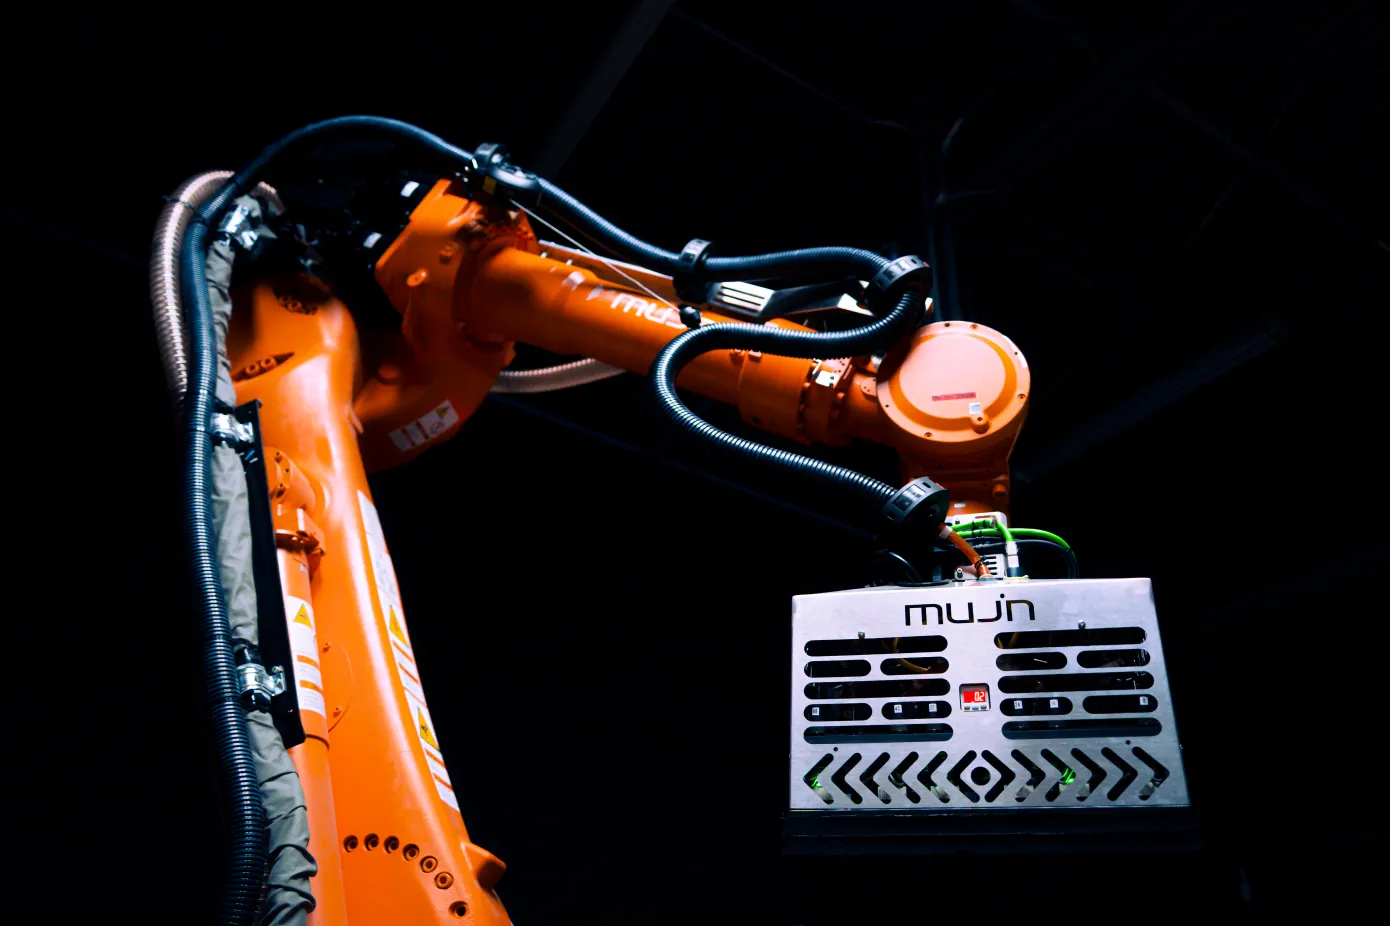 Robot software developer Mujin has raised $85m in funding